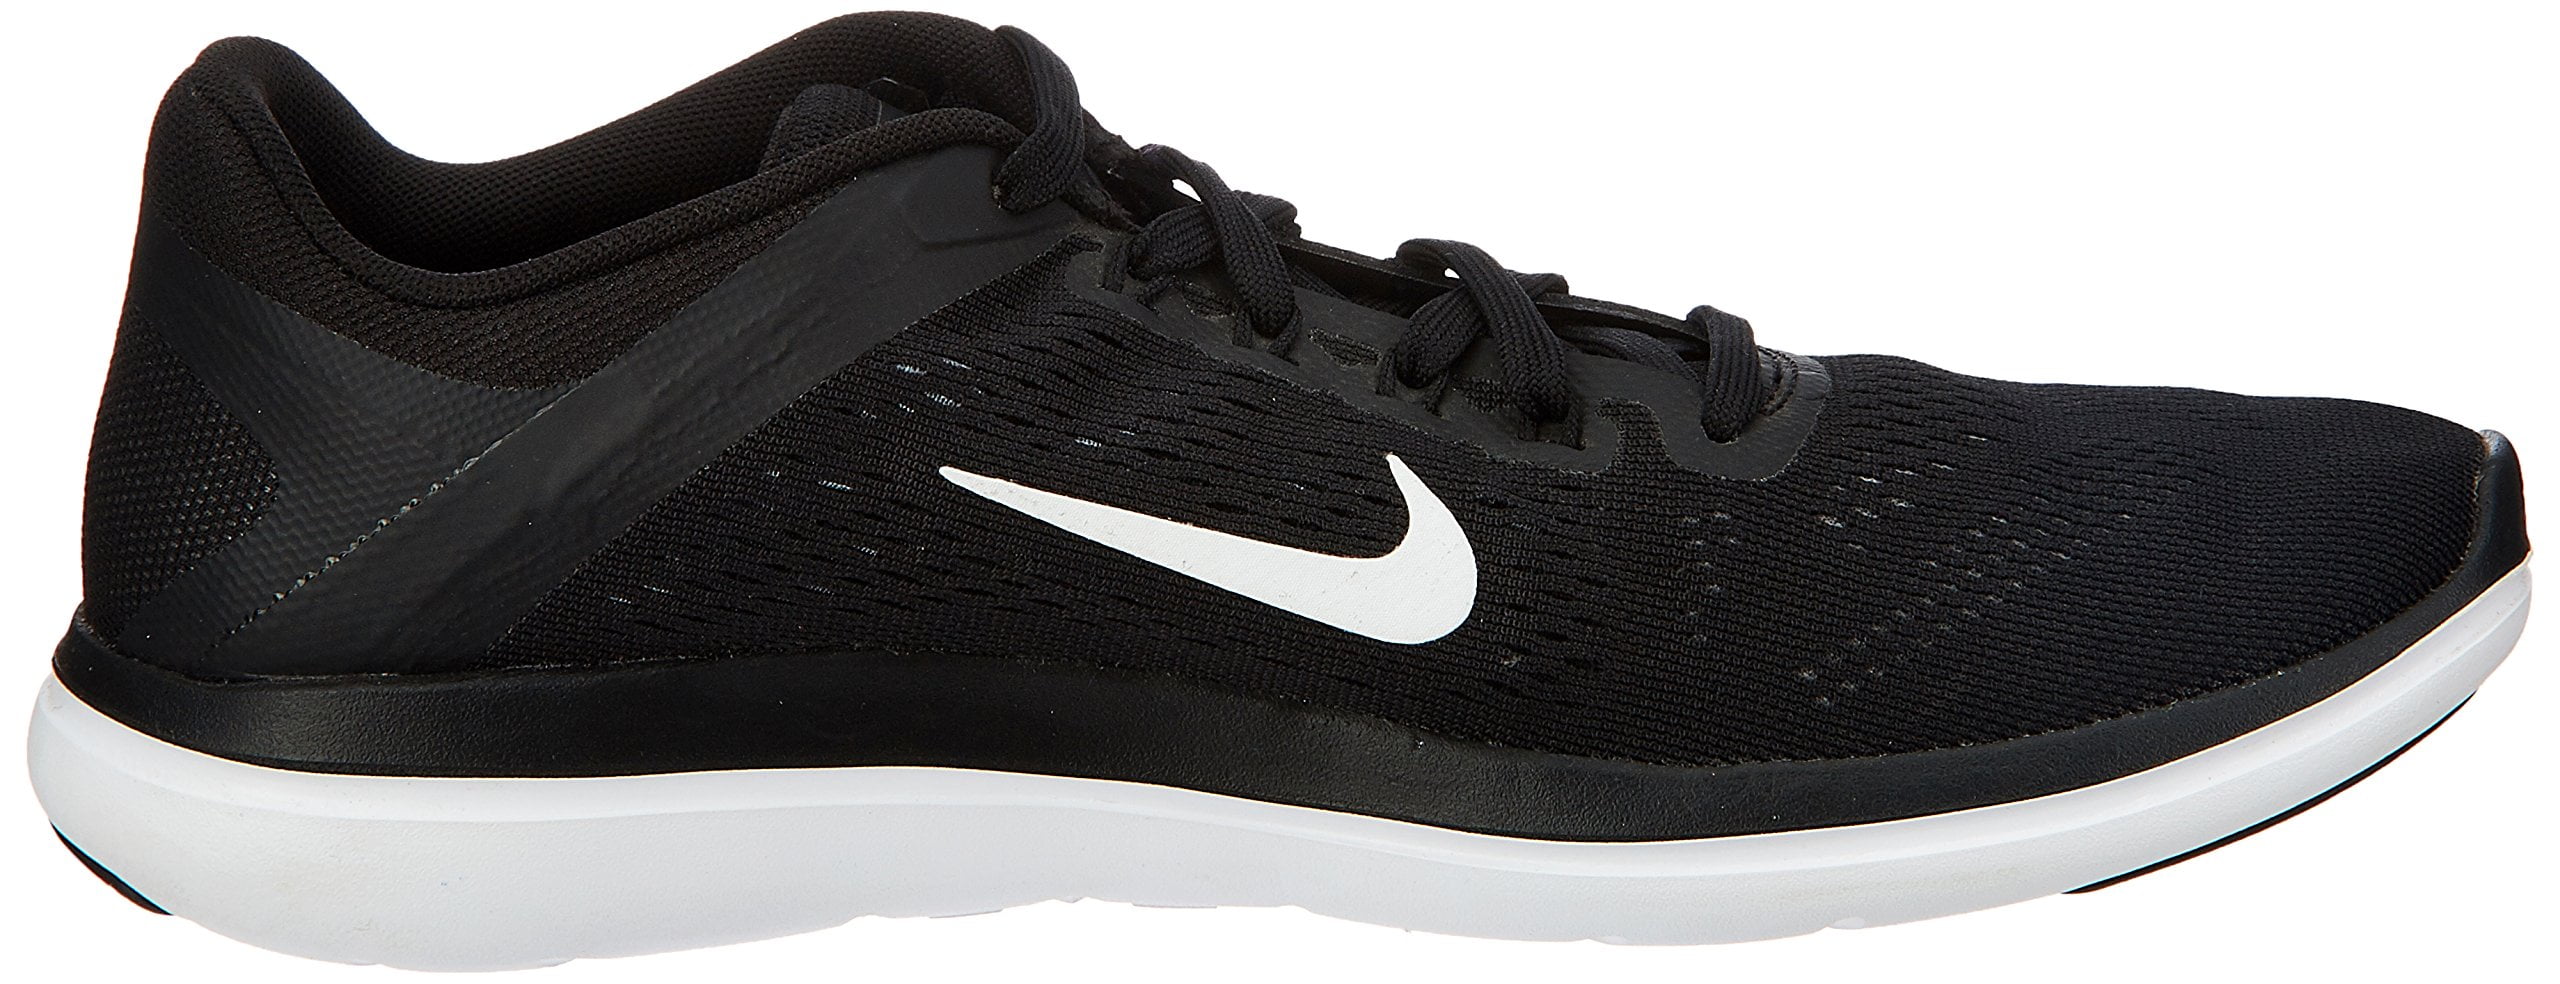 Nike 830369-001: Flex 2016 RN Running Sneakers (10.5 - Walmart.com